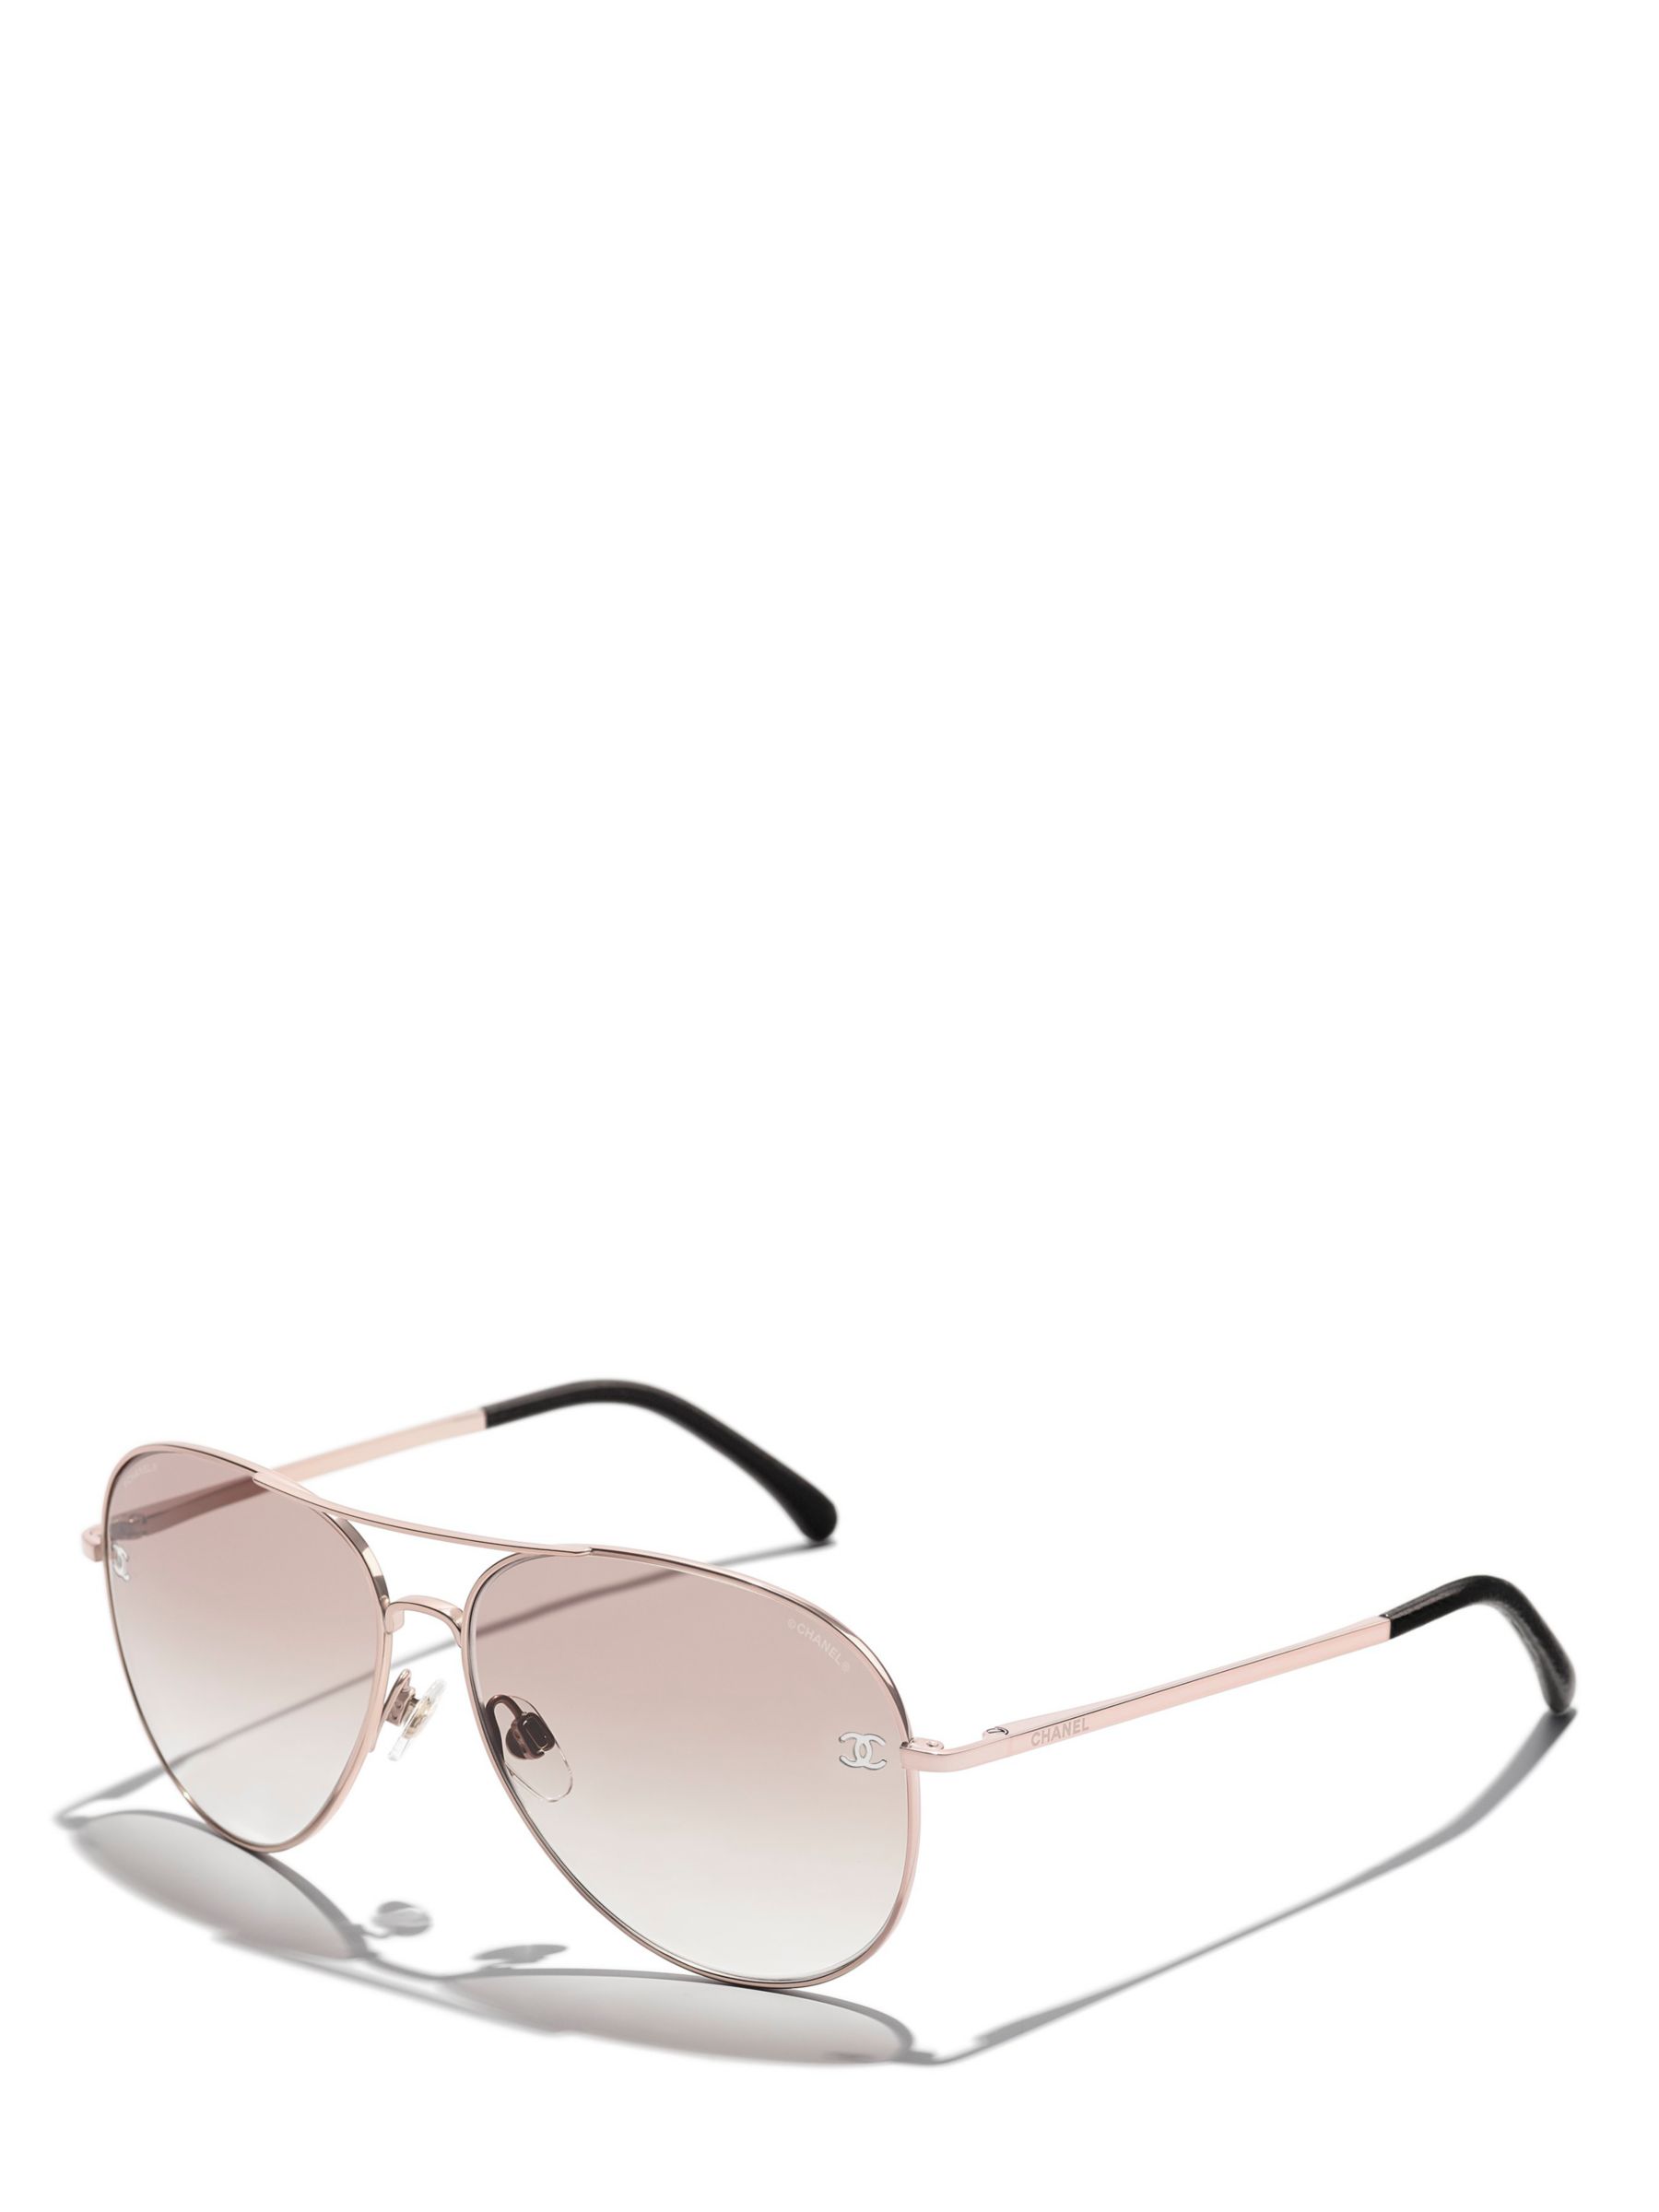 CHANEL Metal CC Aviator Sunglasses 4189-T-Q Pink 794371